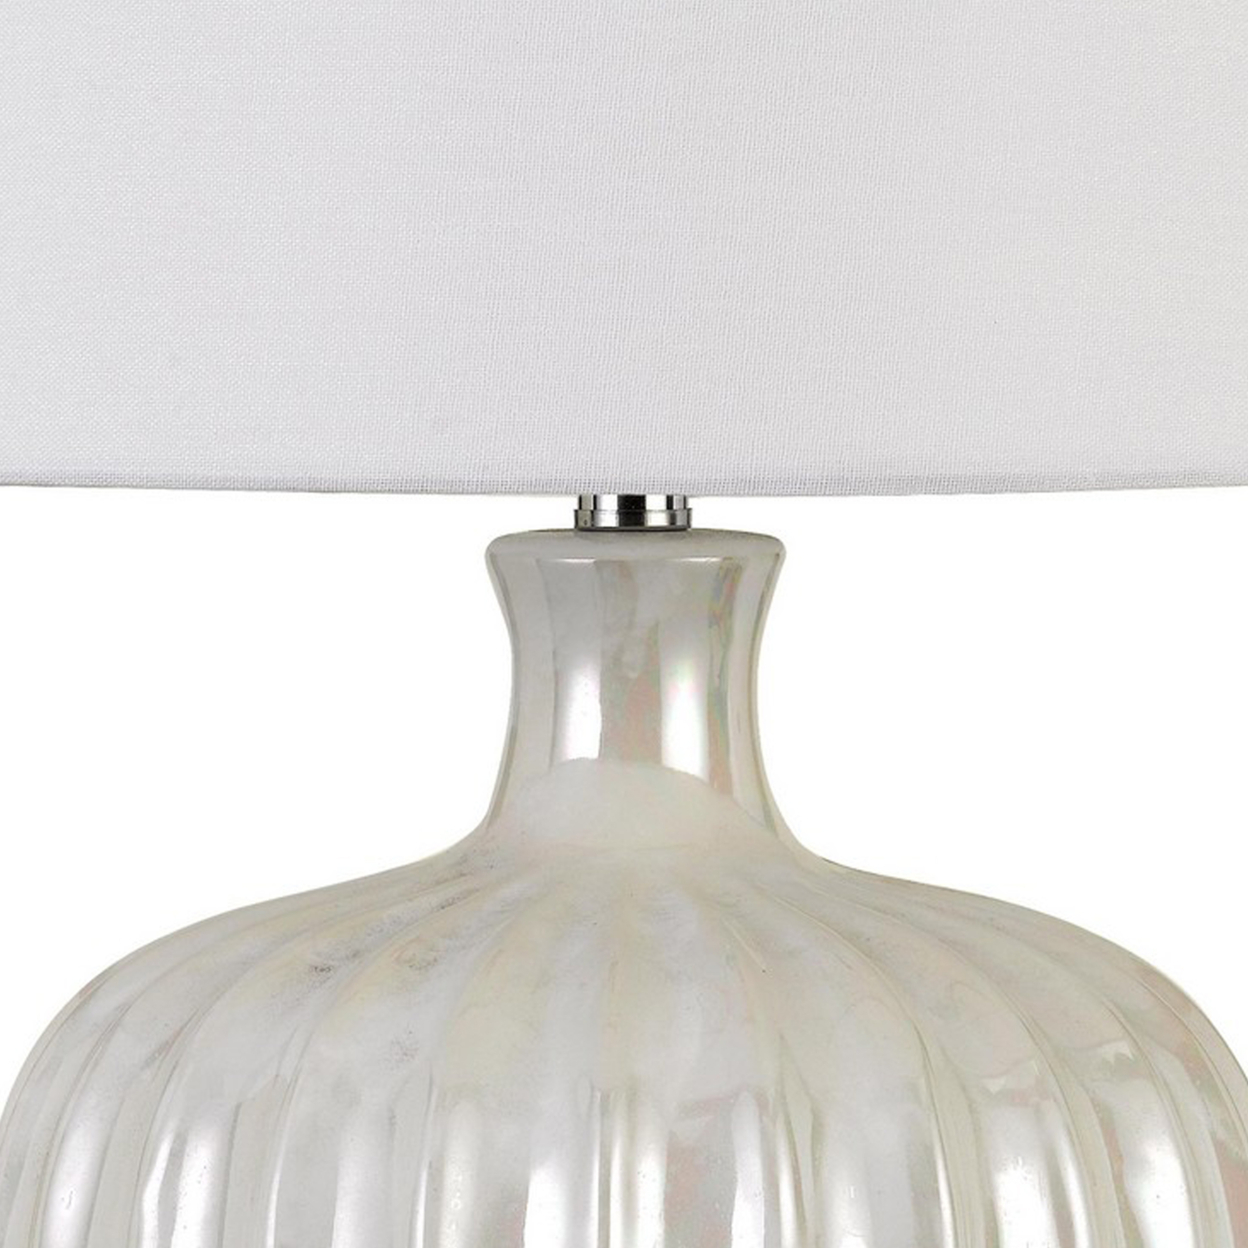 Urn Shaped Ceramic Base Table Lamp With Ribbed Pattern, White- Saltoro Sherpi